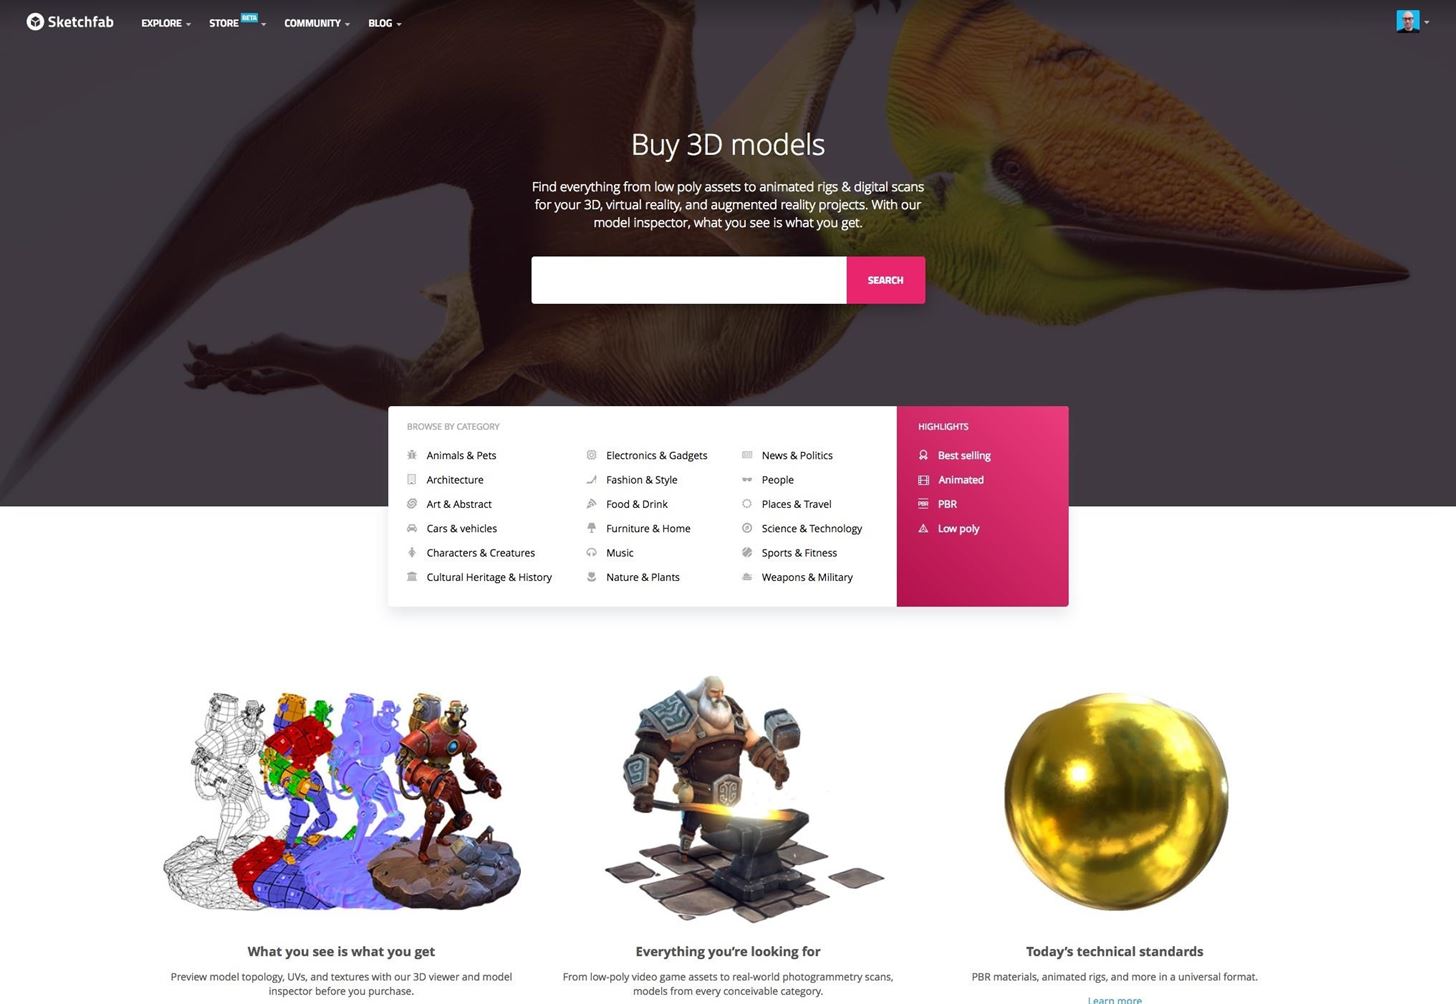 Sketchfab Launches Professional 3D Model Store for AR & VR Content Creators